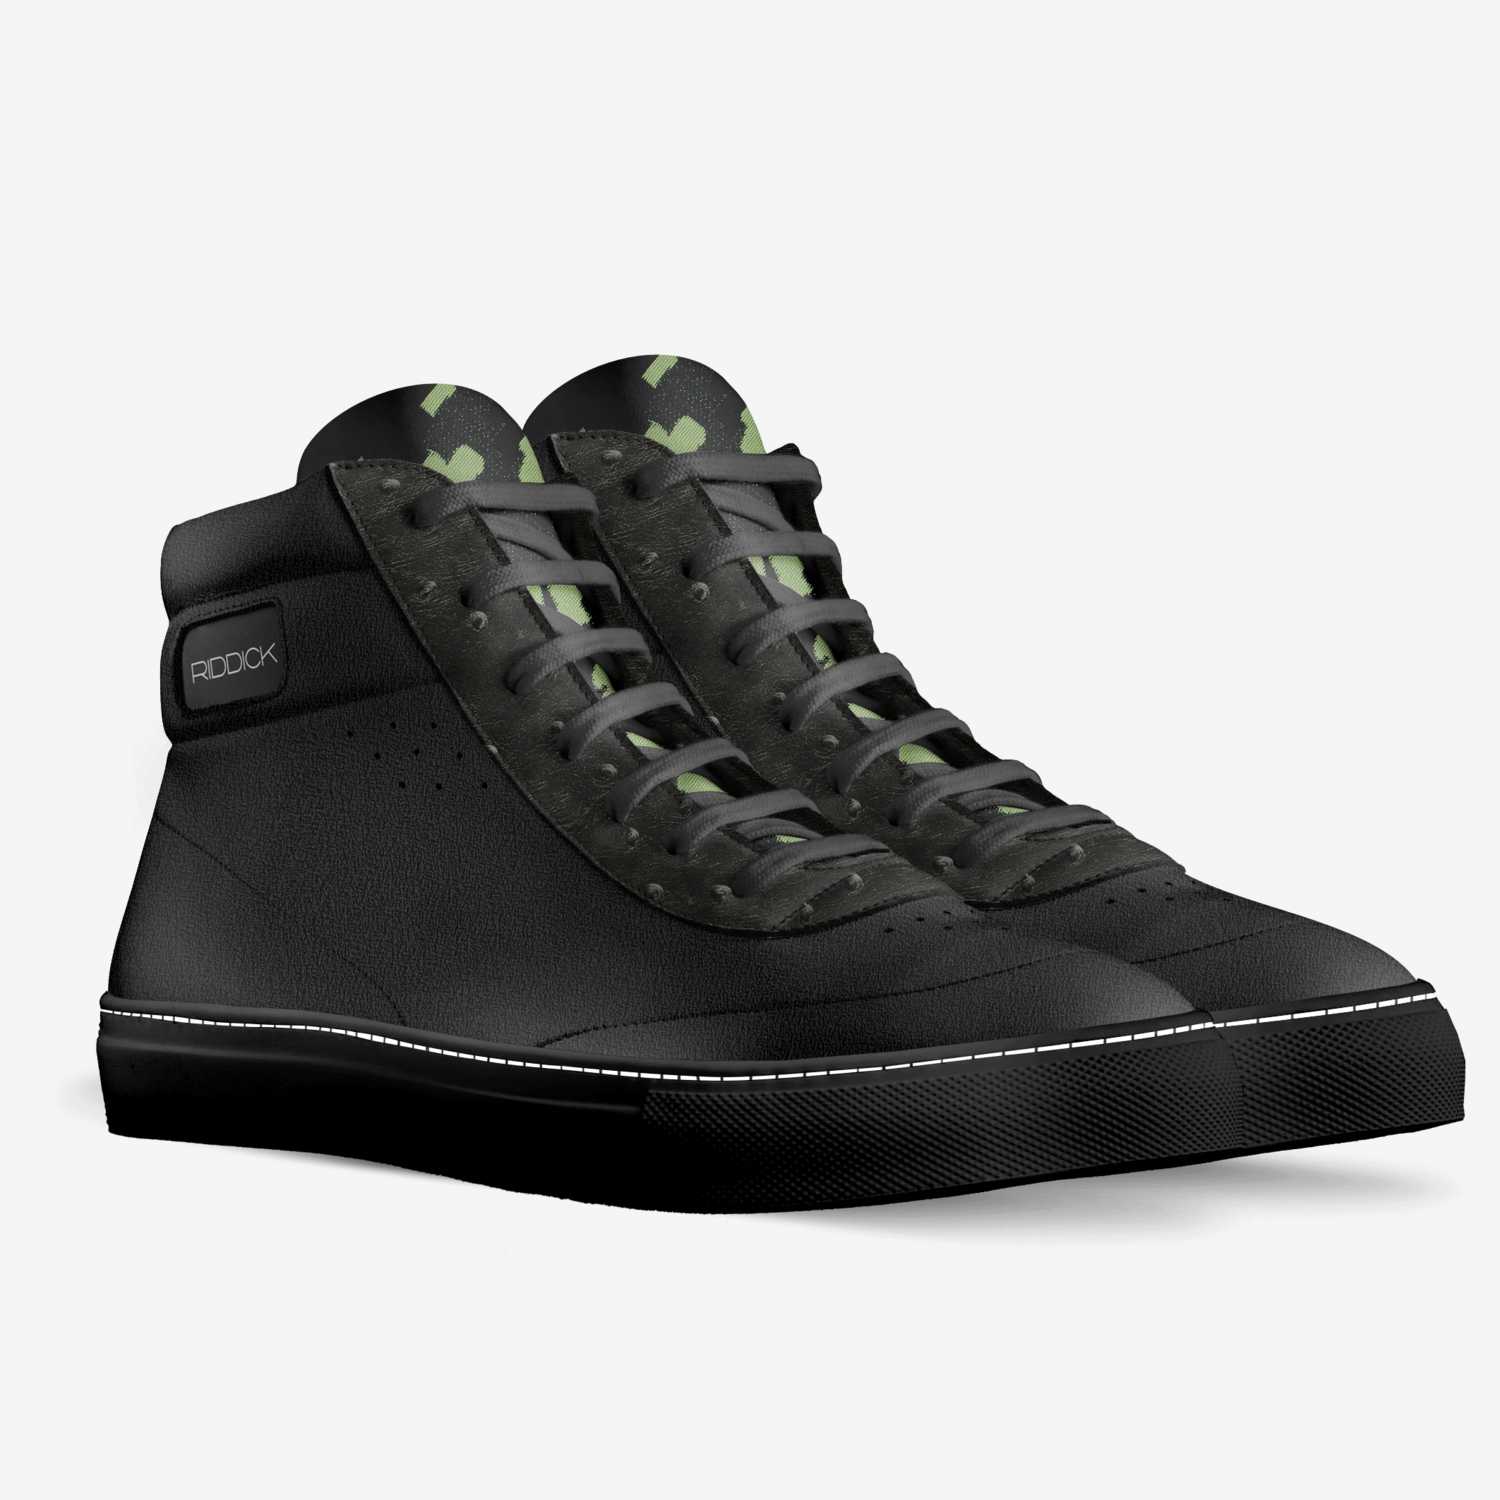 BLACK-LIST 2.0 [UNISEX] - Riddick Shoes Shoe Riddick Shoes   